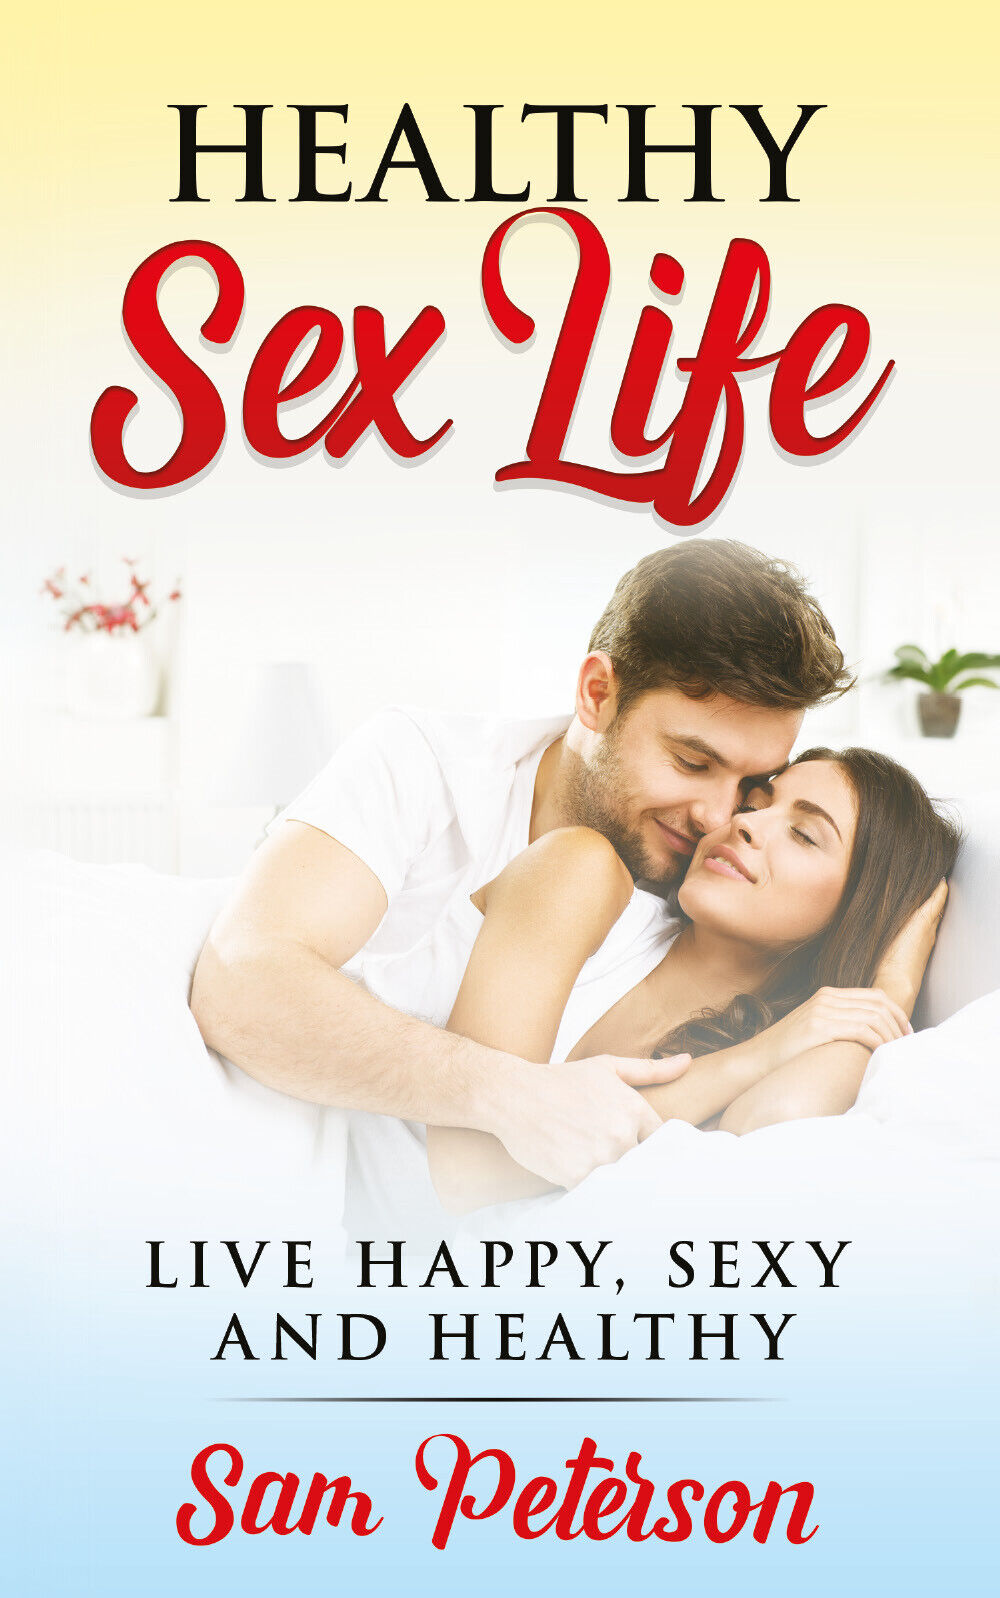 Healthy sex life Live Happy, Sexy and Healthy di Sam Peterson,  2021,  Youcanpri